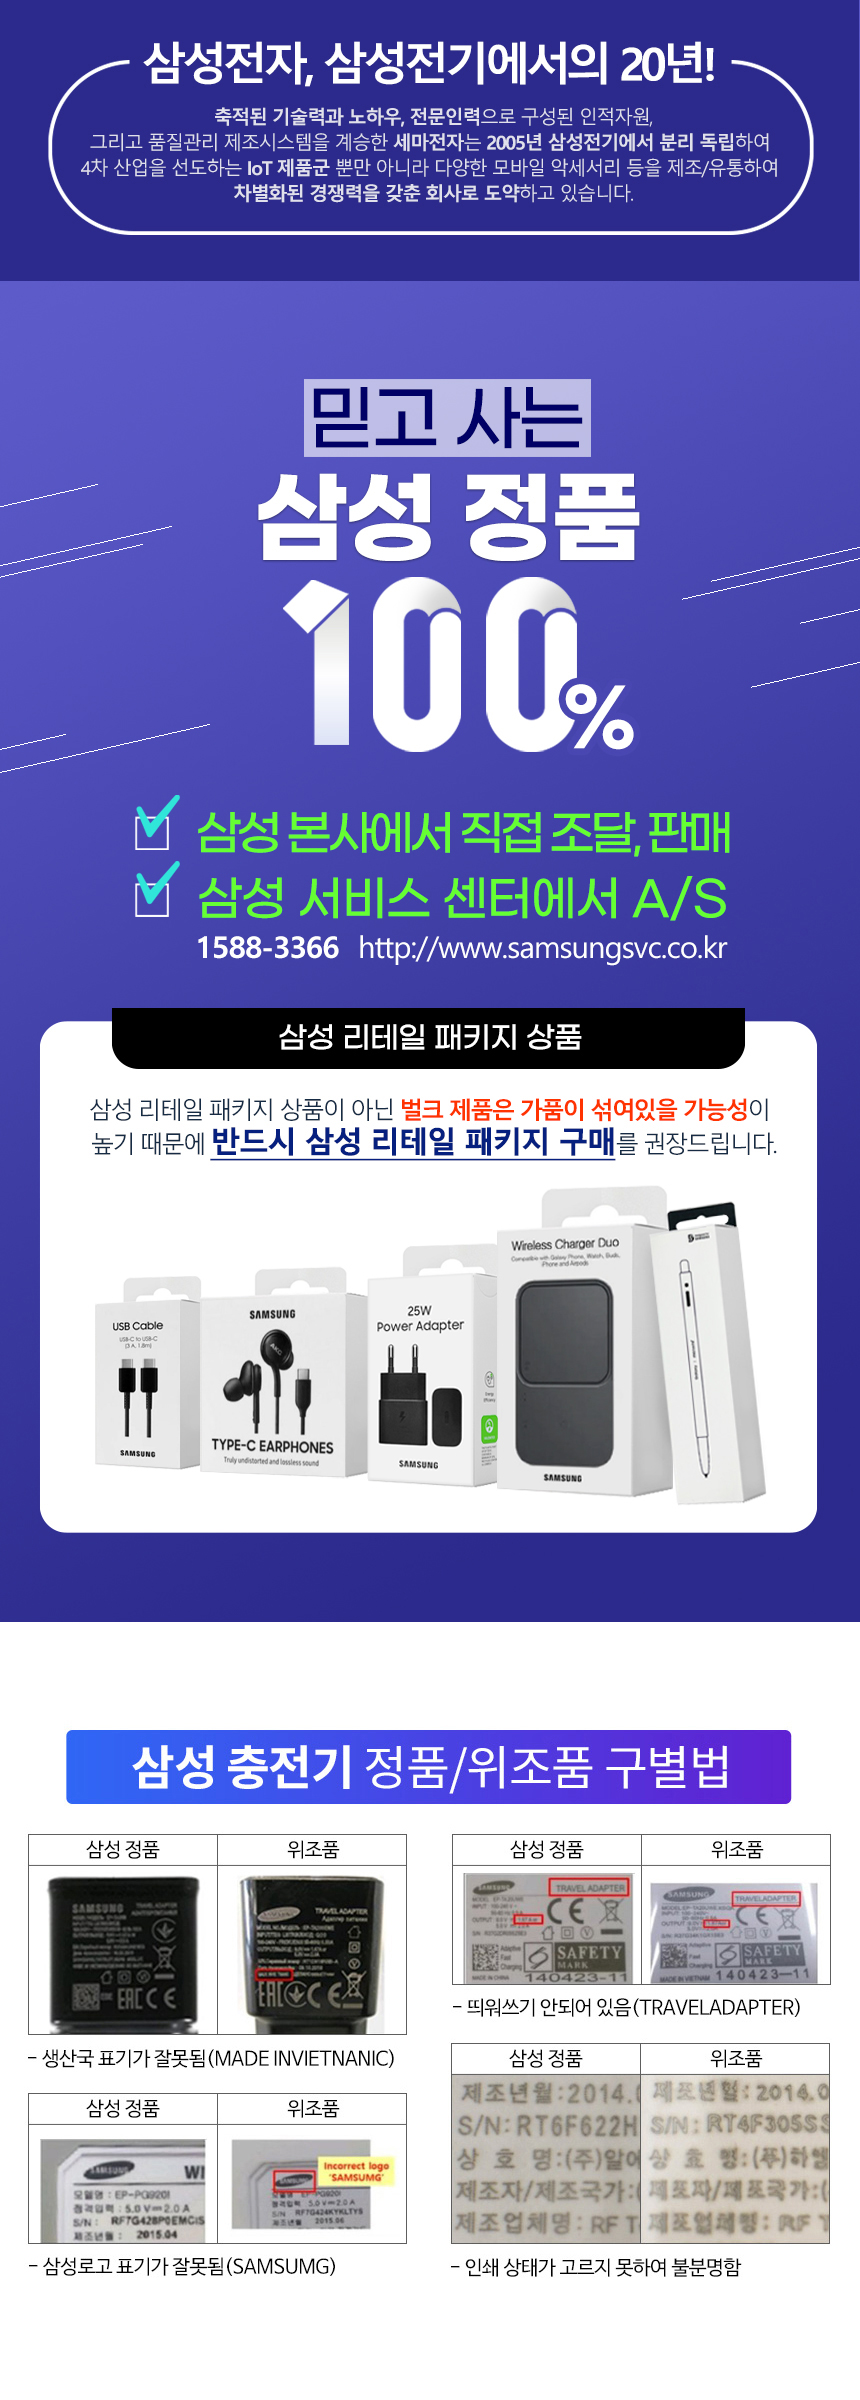 Samsung_Real_TA.jpg